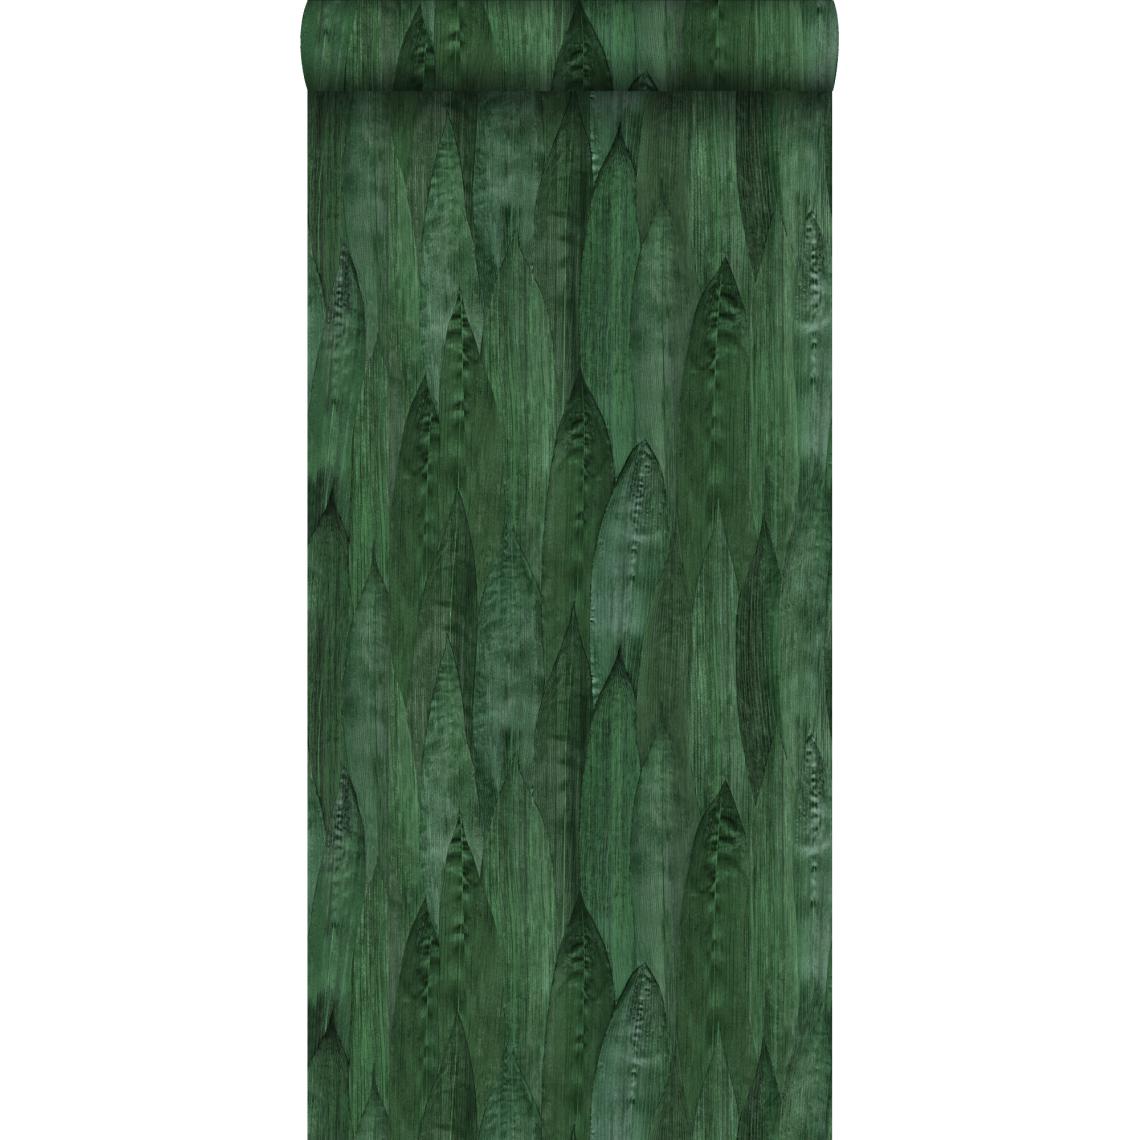 ESTAhome - ESTAhome papier peint feuilles vert émeraude - 138988 - 0.53 x 10.05 m - Papier peint